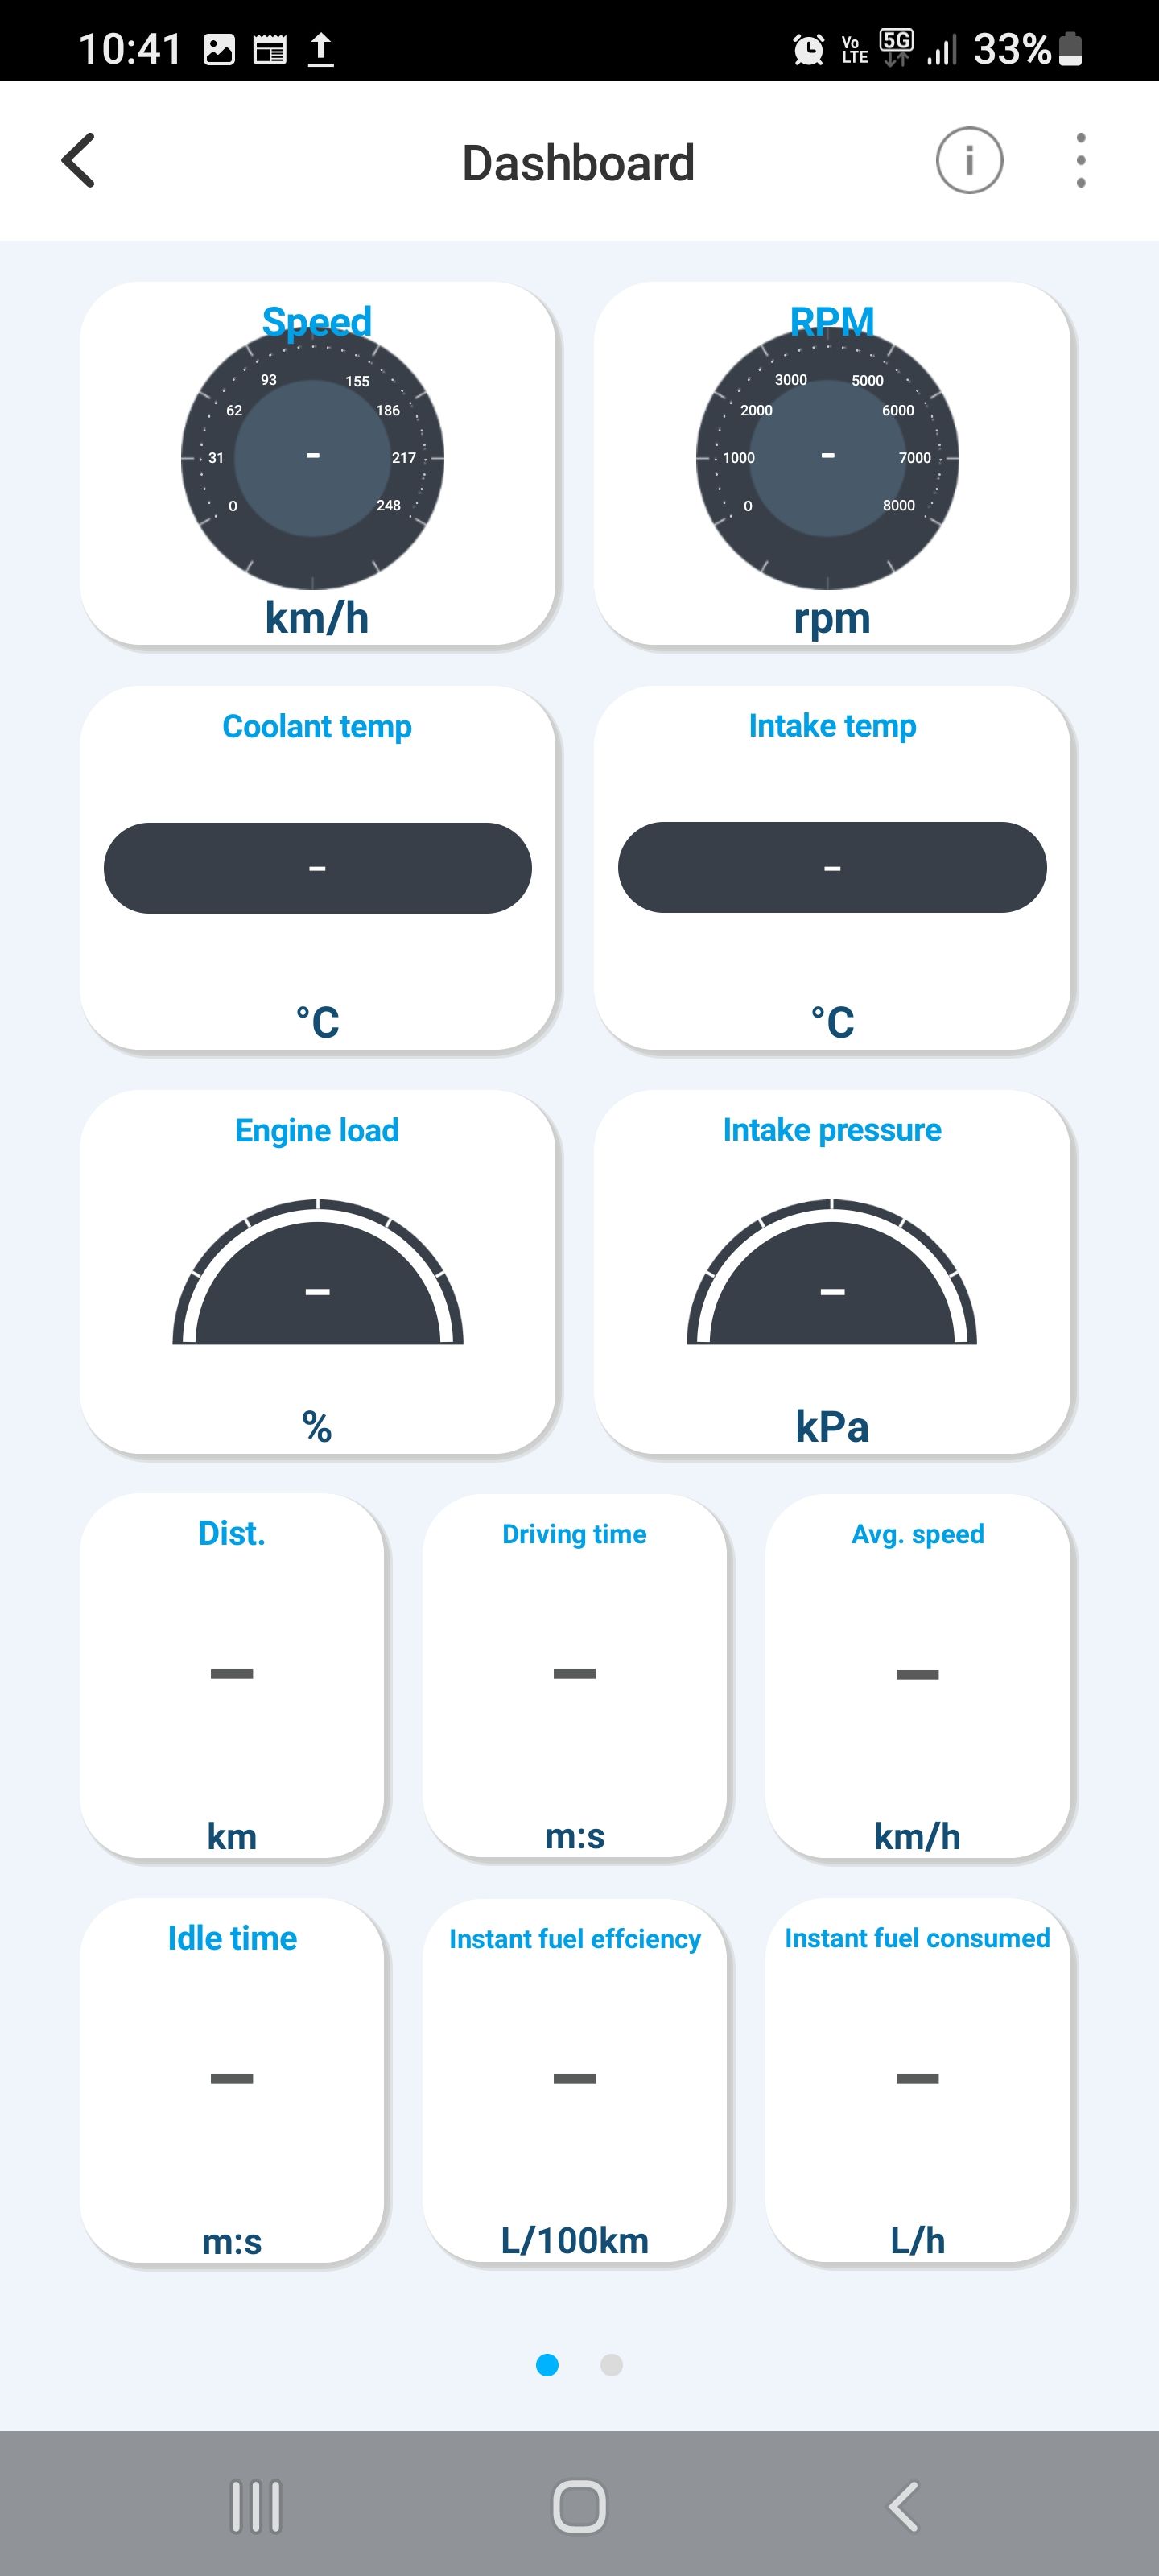 Infocar app screenshot showing virtual dashboard